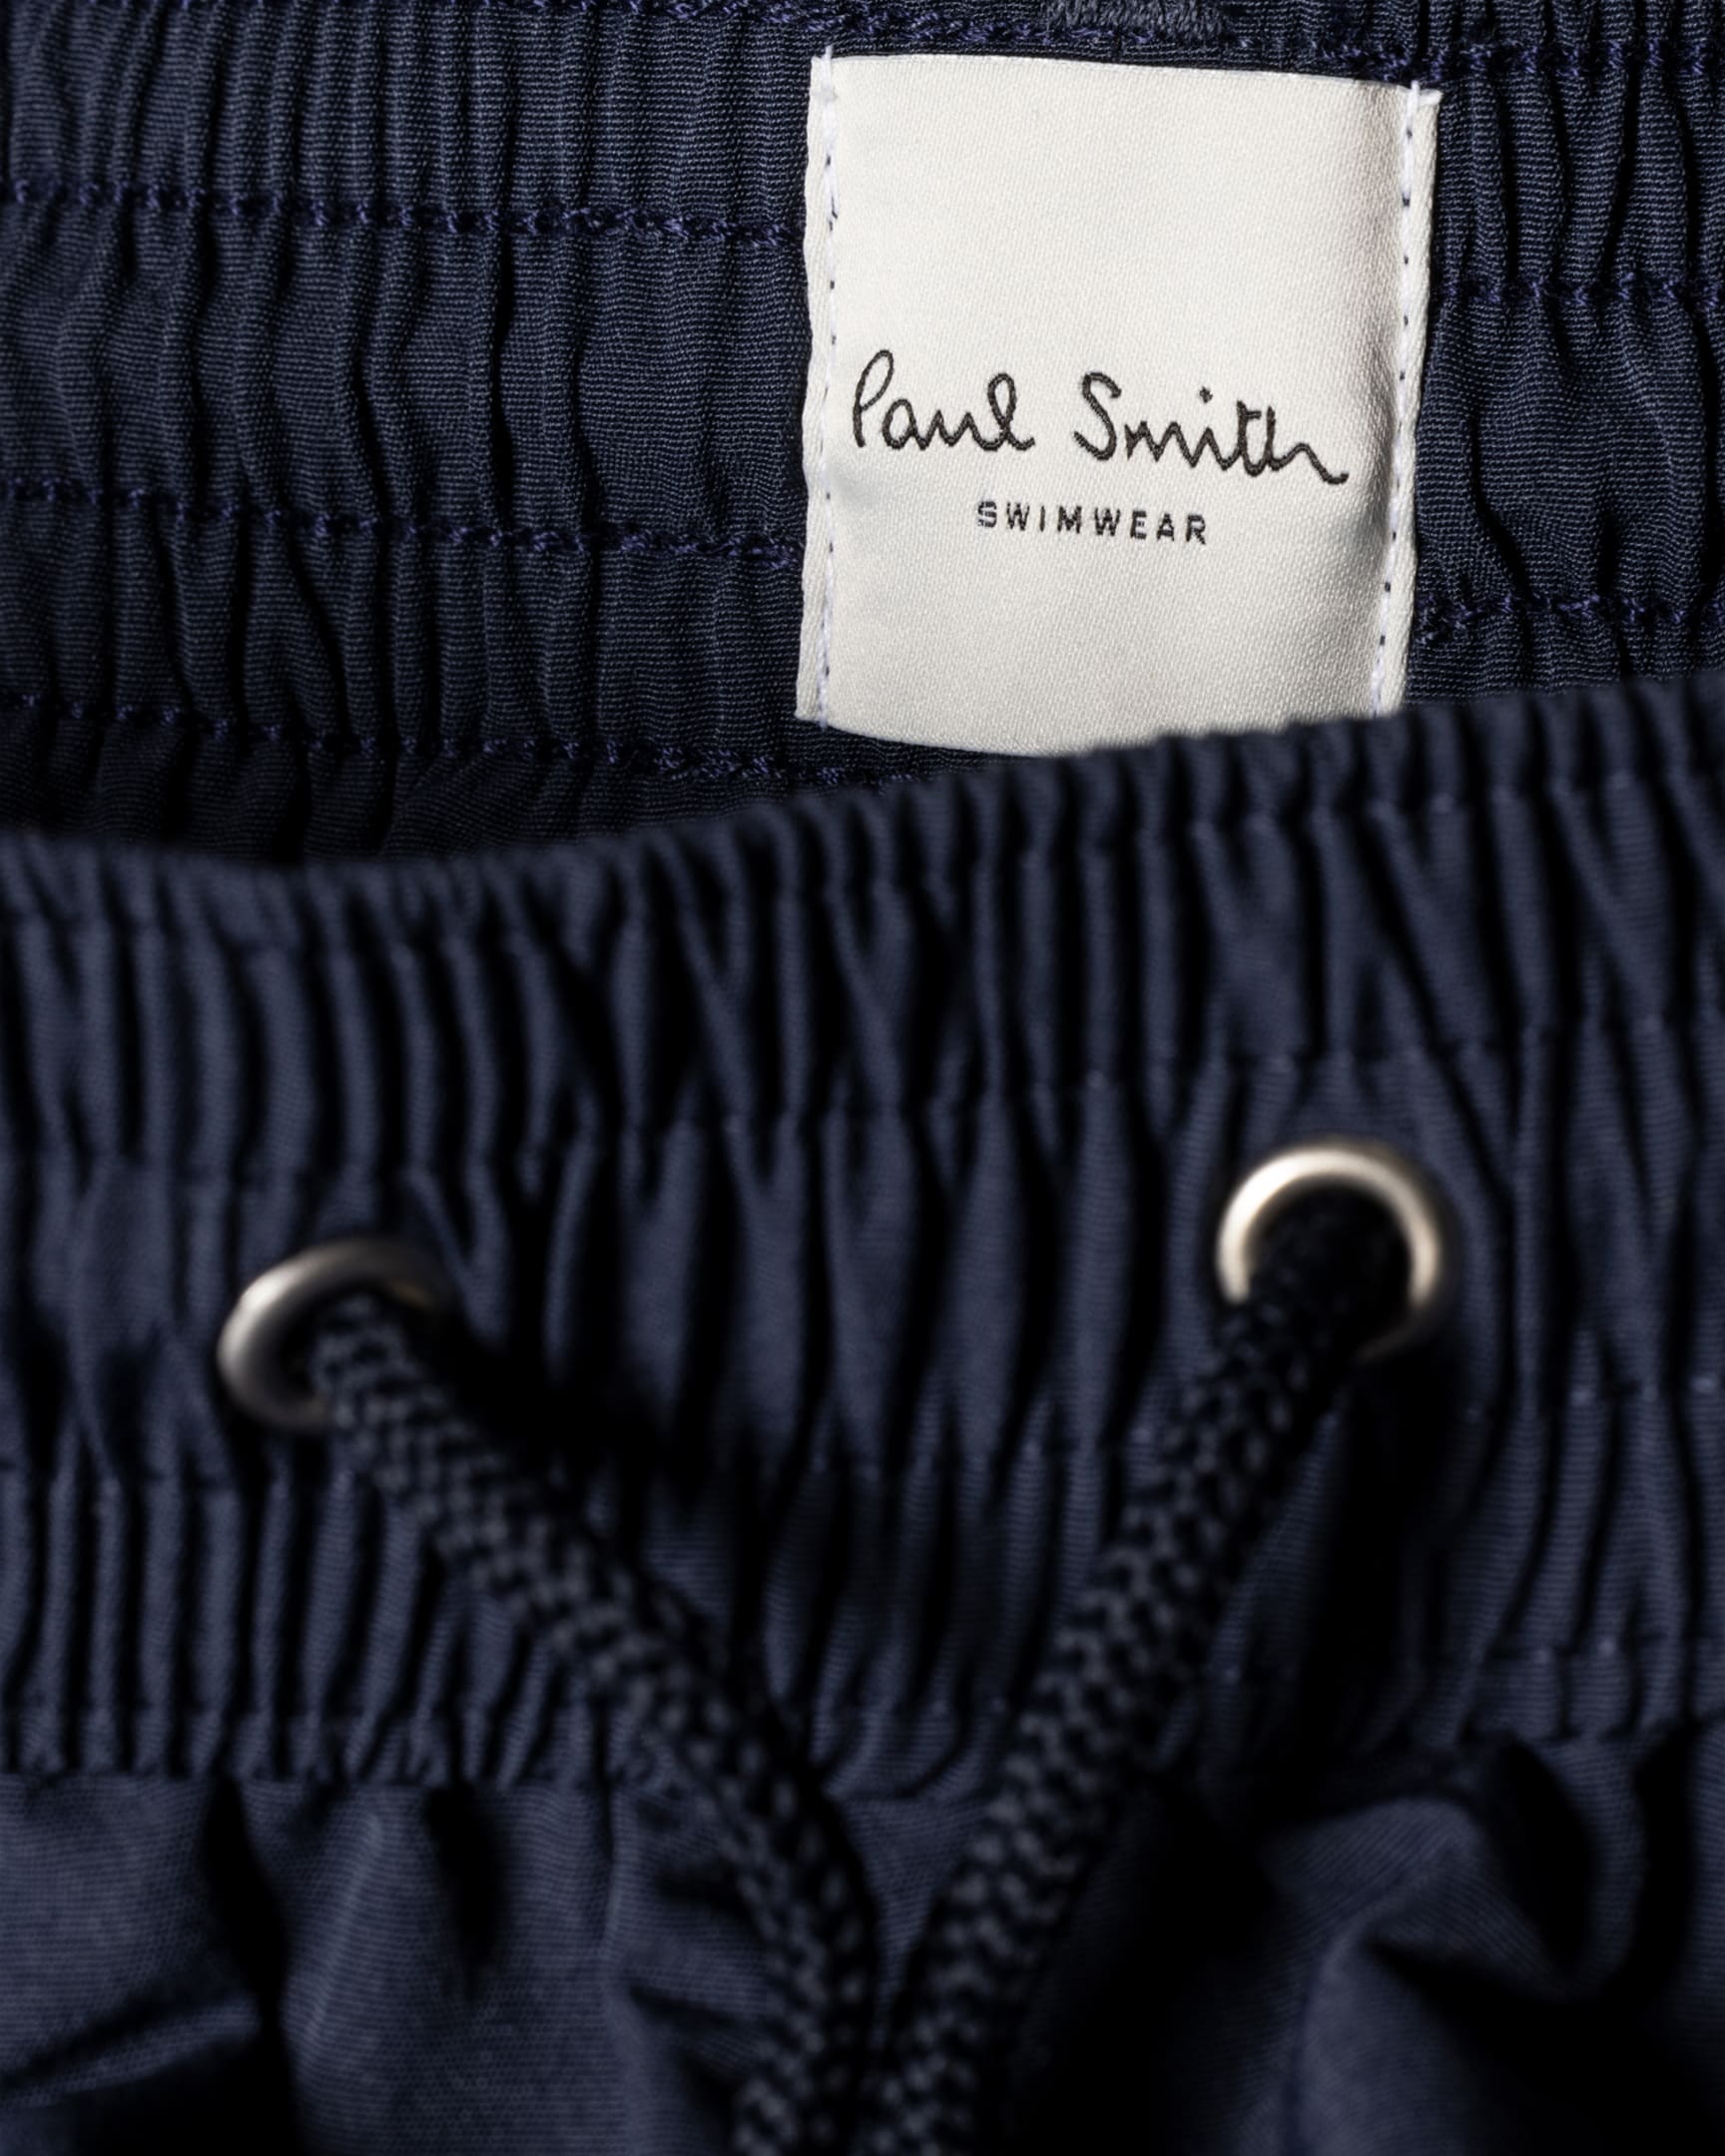 Detail View - Navy Blue Swim Shorts With 'Artist Stripe' Trim Paul Smith